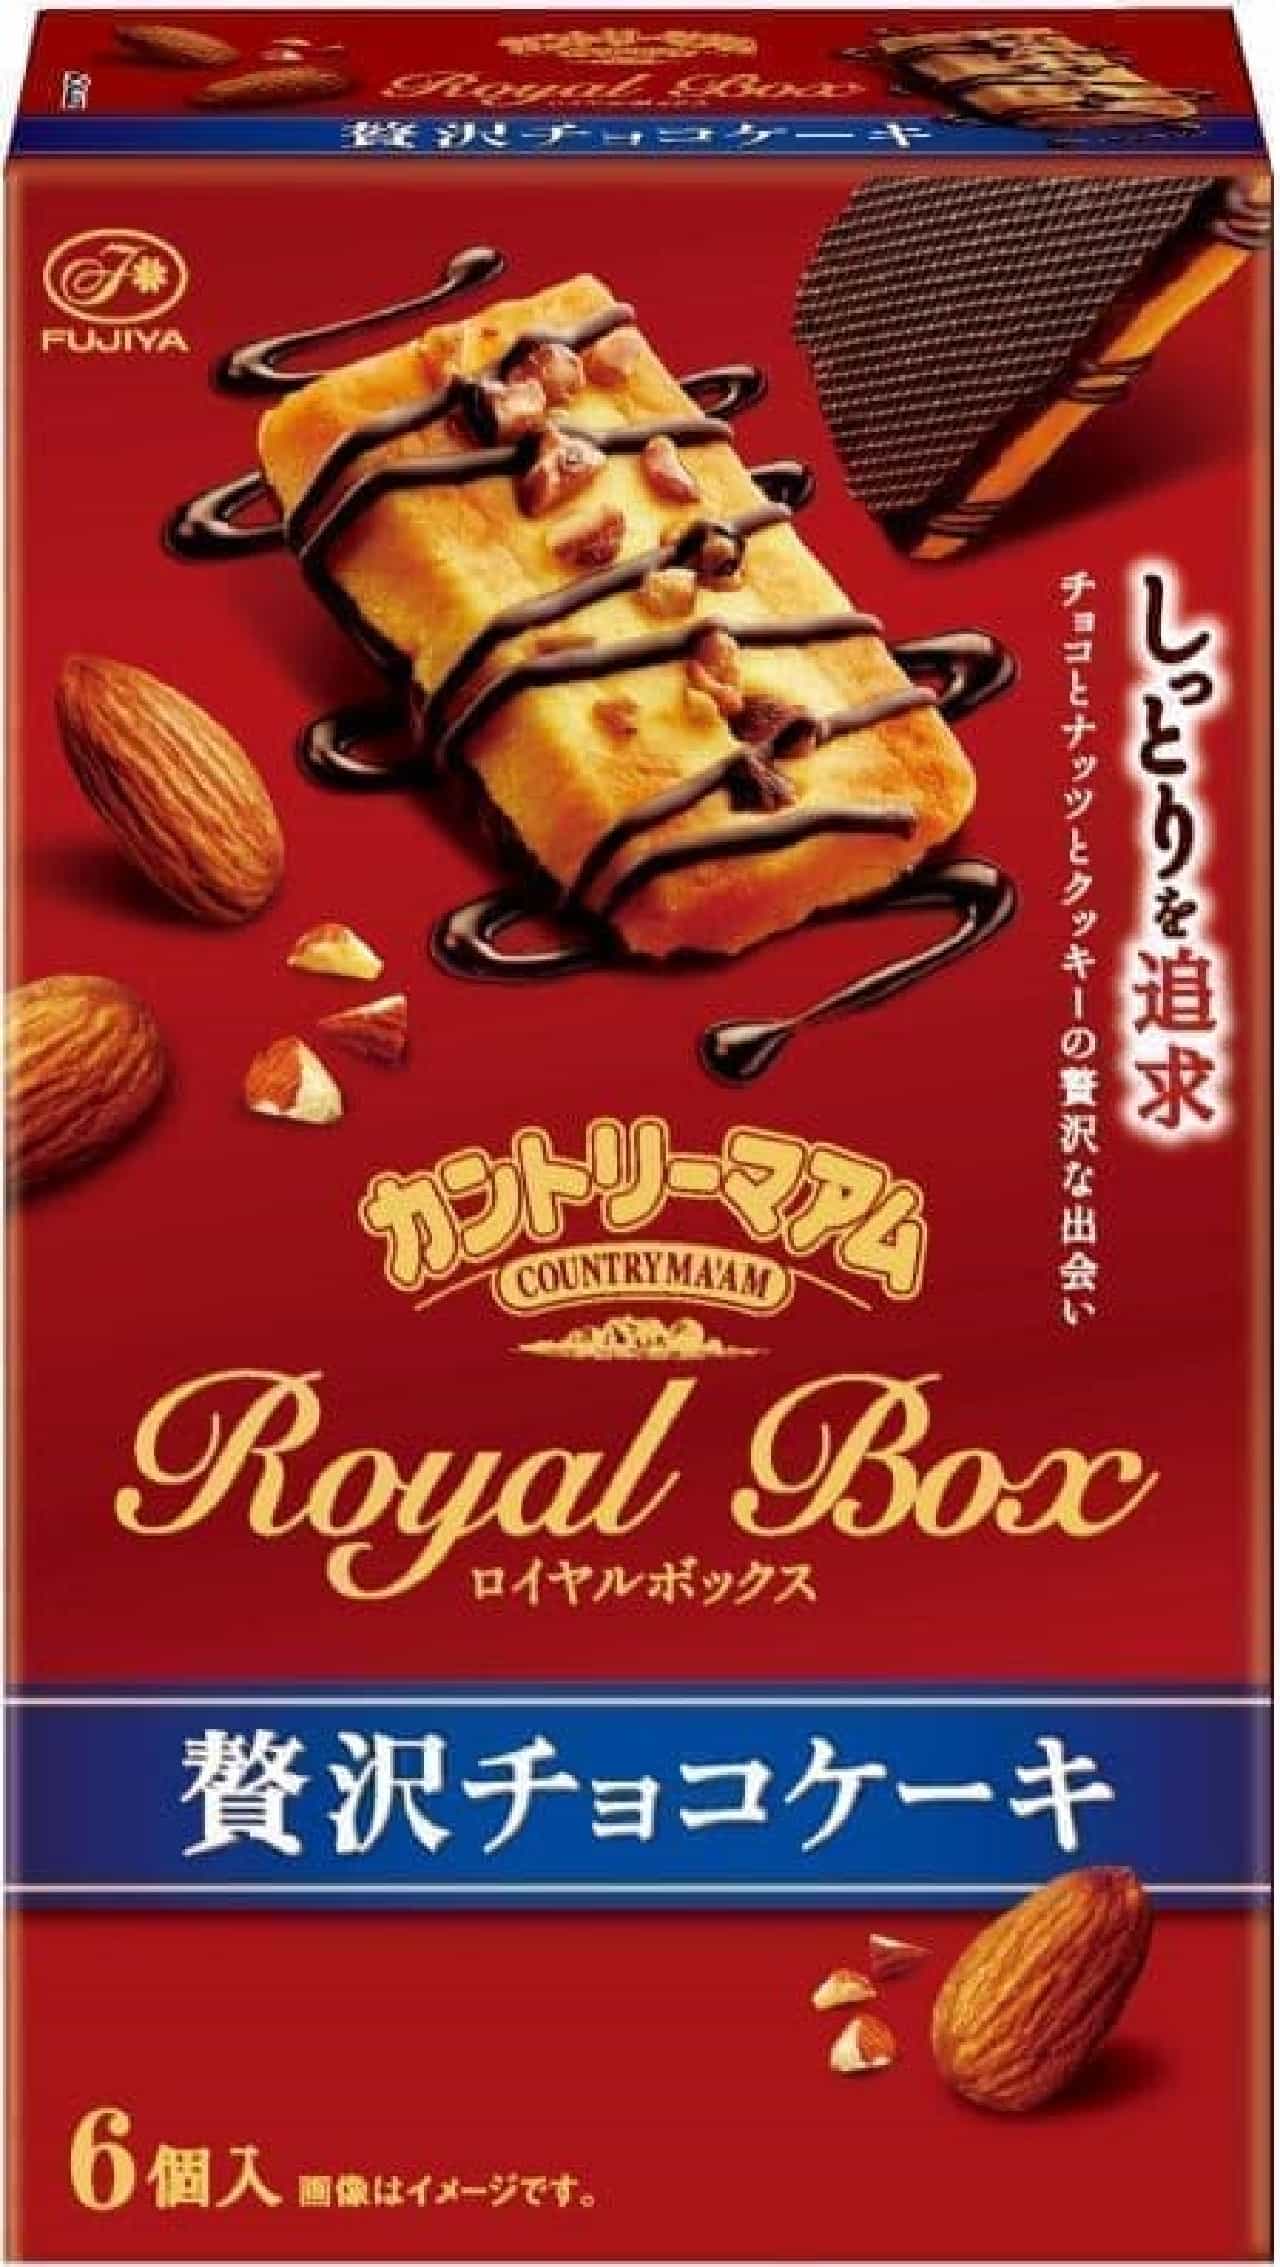 Fujiya "Country Ma'am Royal Box (luxury chocolate cake)"